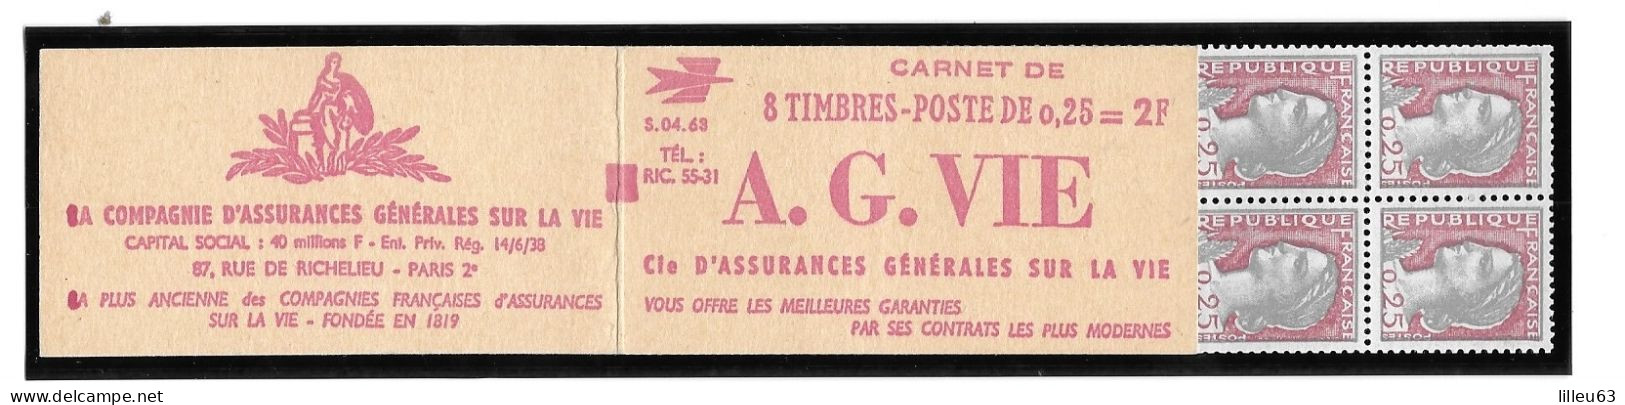 Rare Variete 2 Carnets Marianne Decaris  1263  Carnet 367 Et 367a  Maury  Série 4.63  6mm Au Lieu De 8mm SUP - Modern : 1959-…